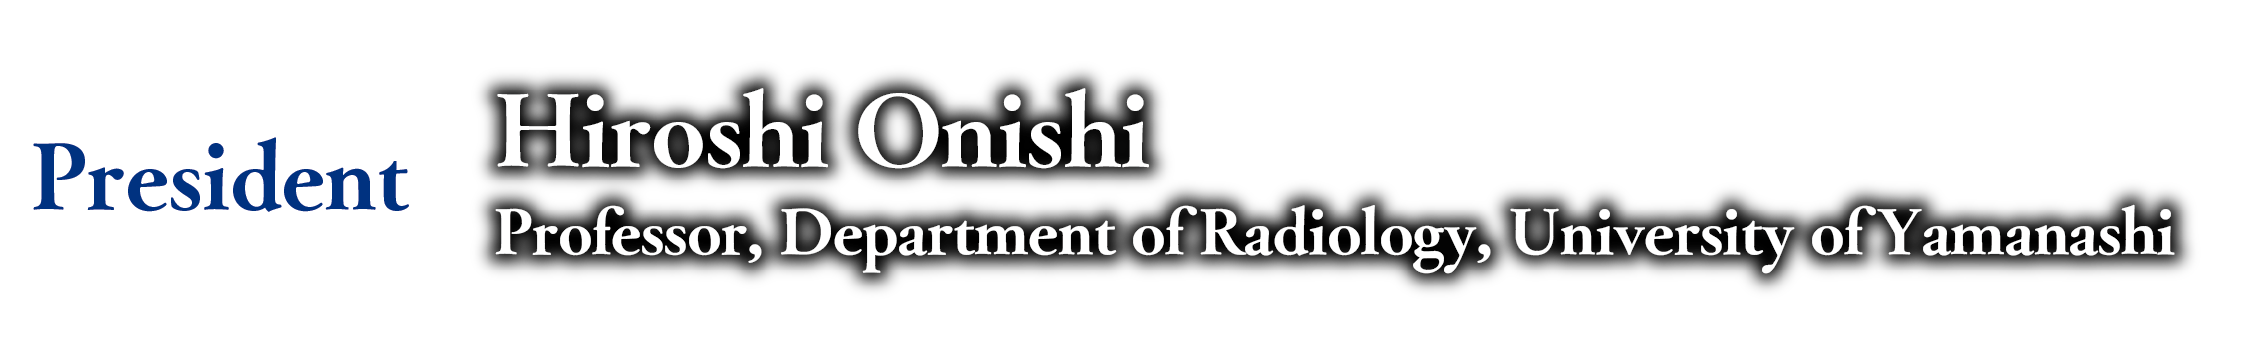 President: Hiroshi Onishi (Professor, Department of Radiology, University of Yamanashi)